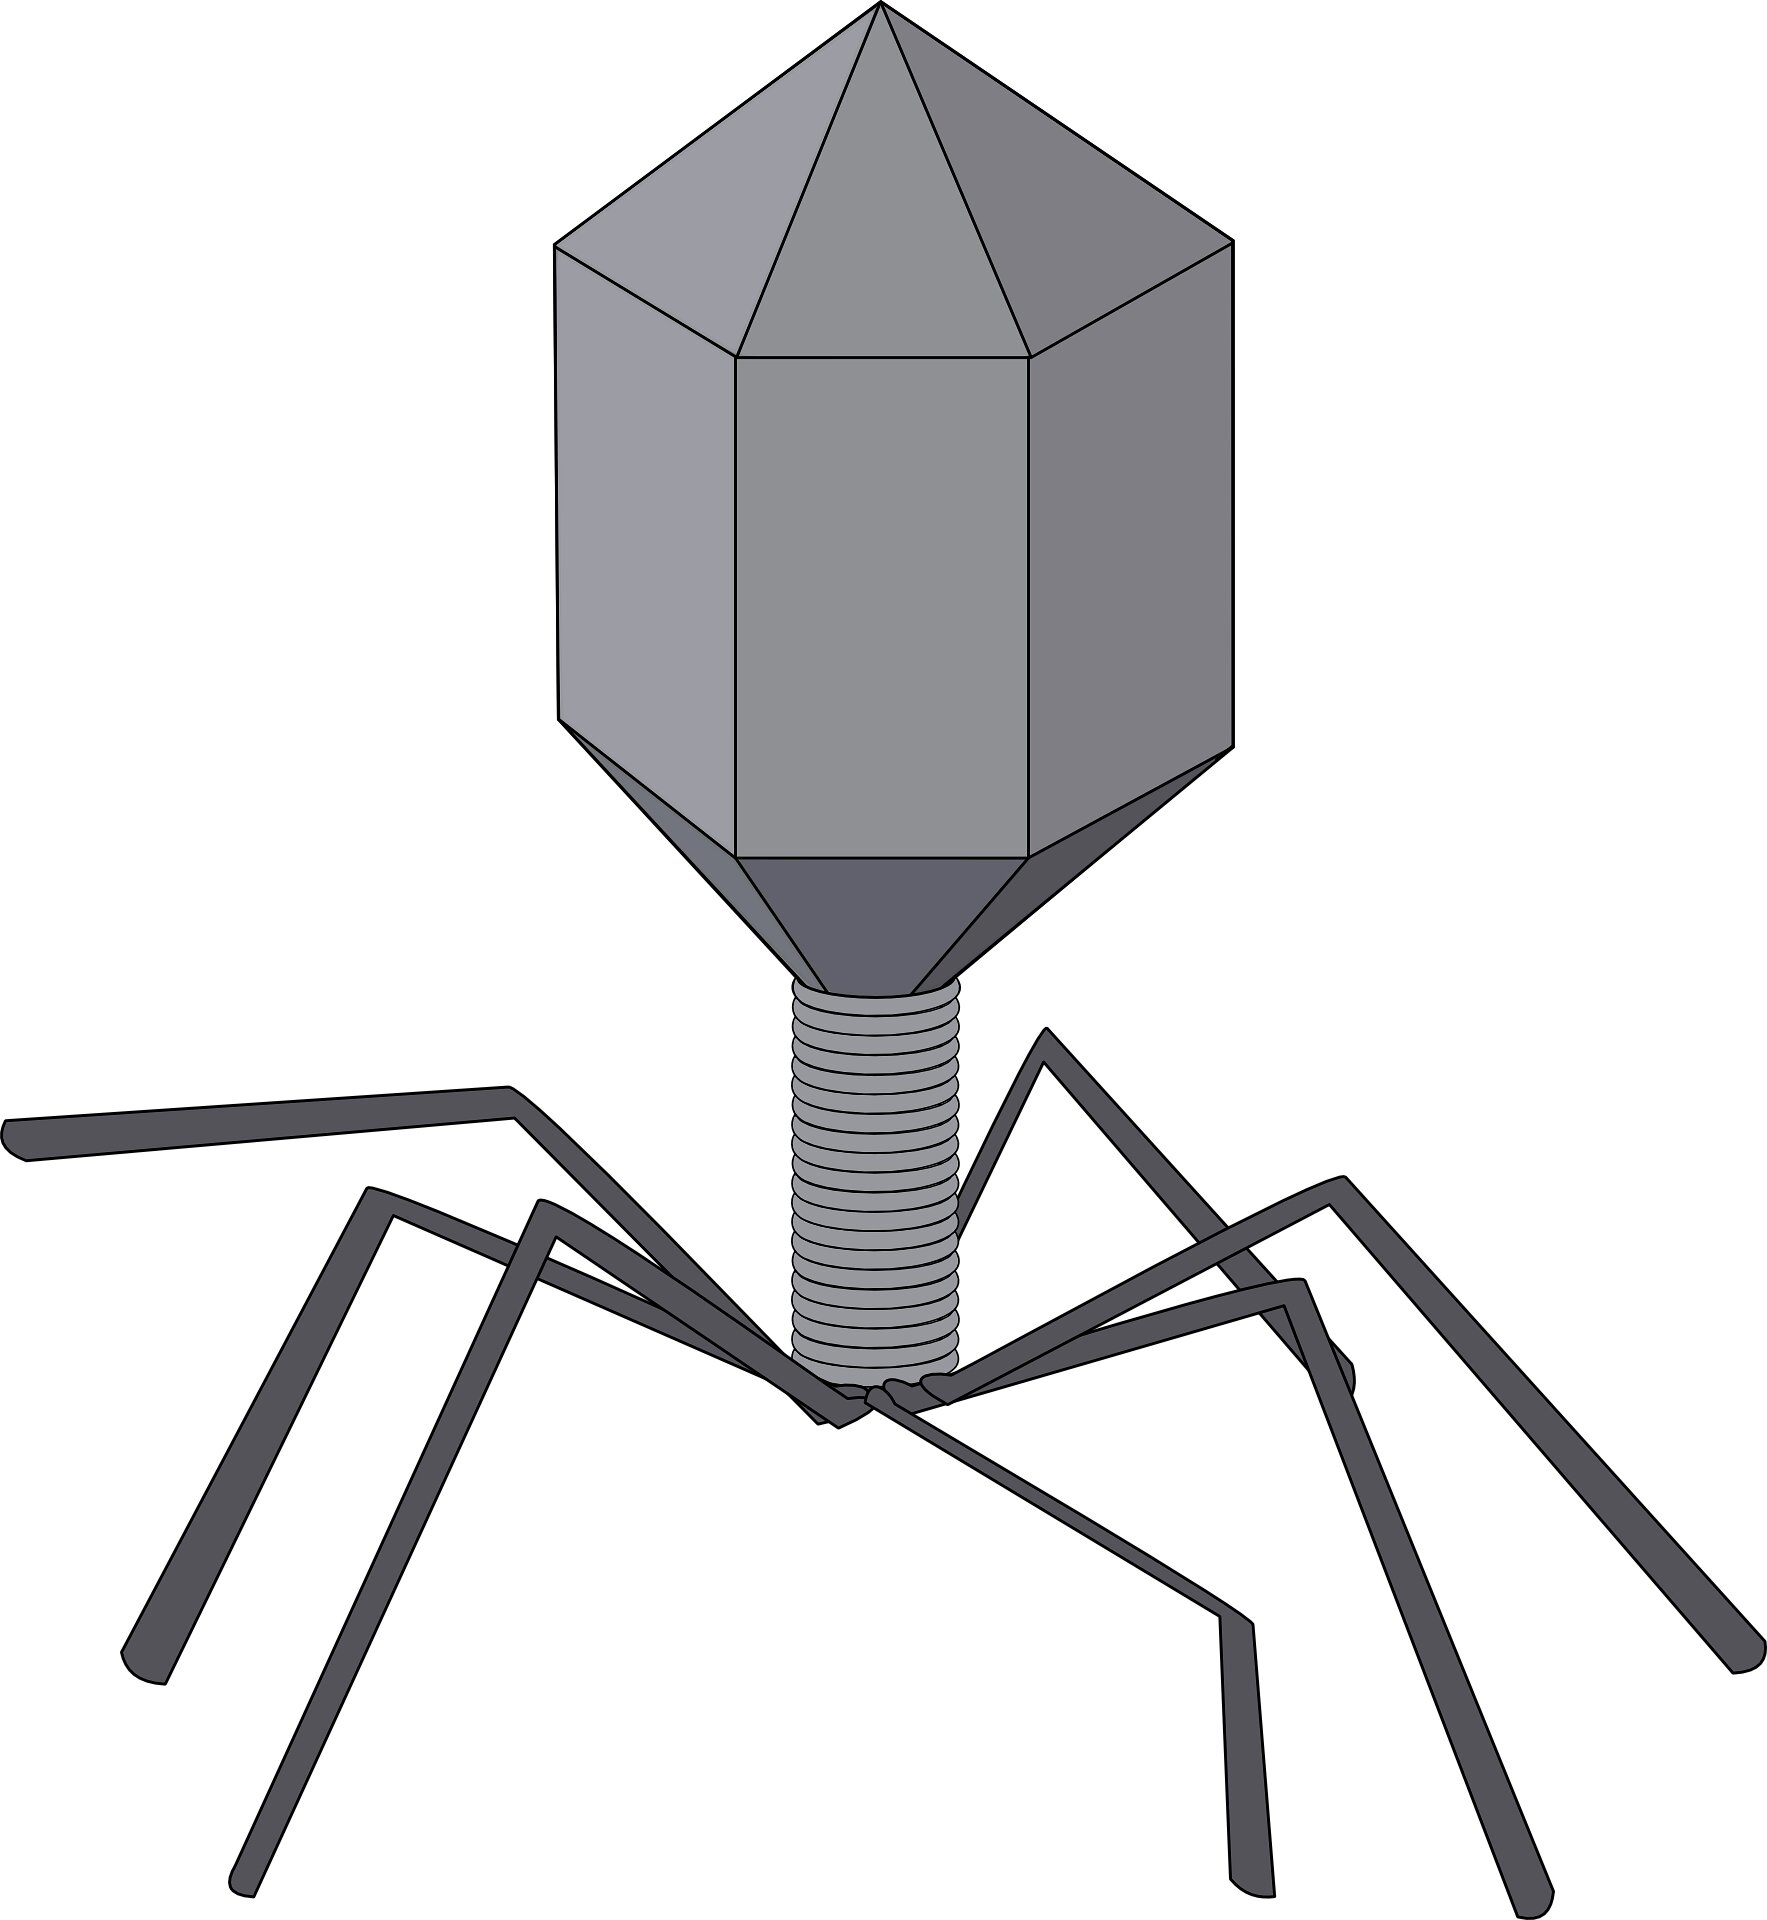 phages